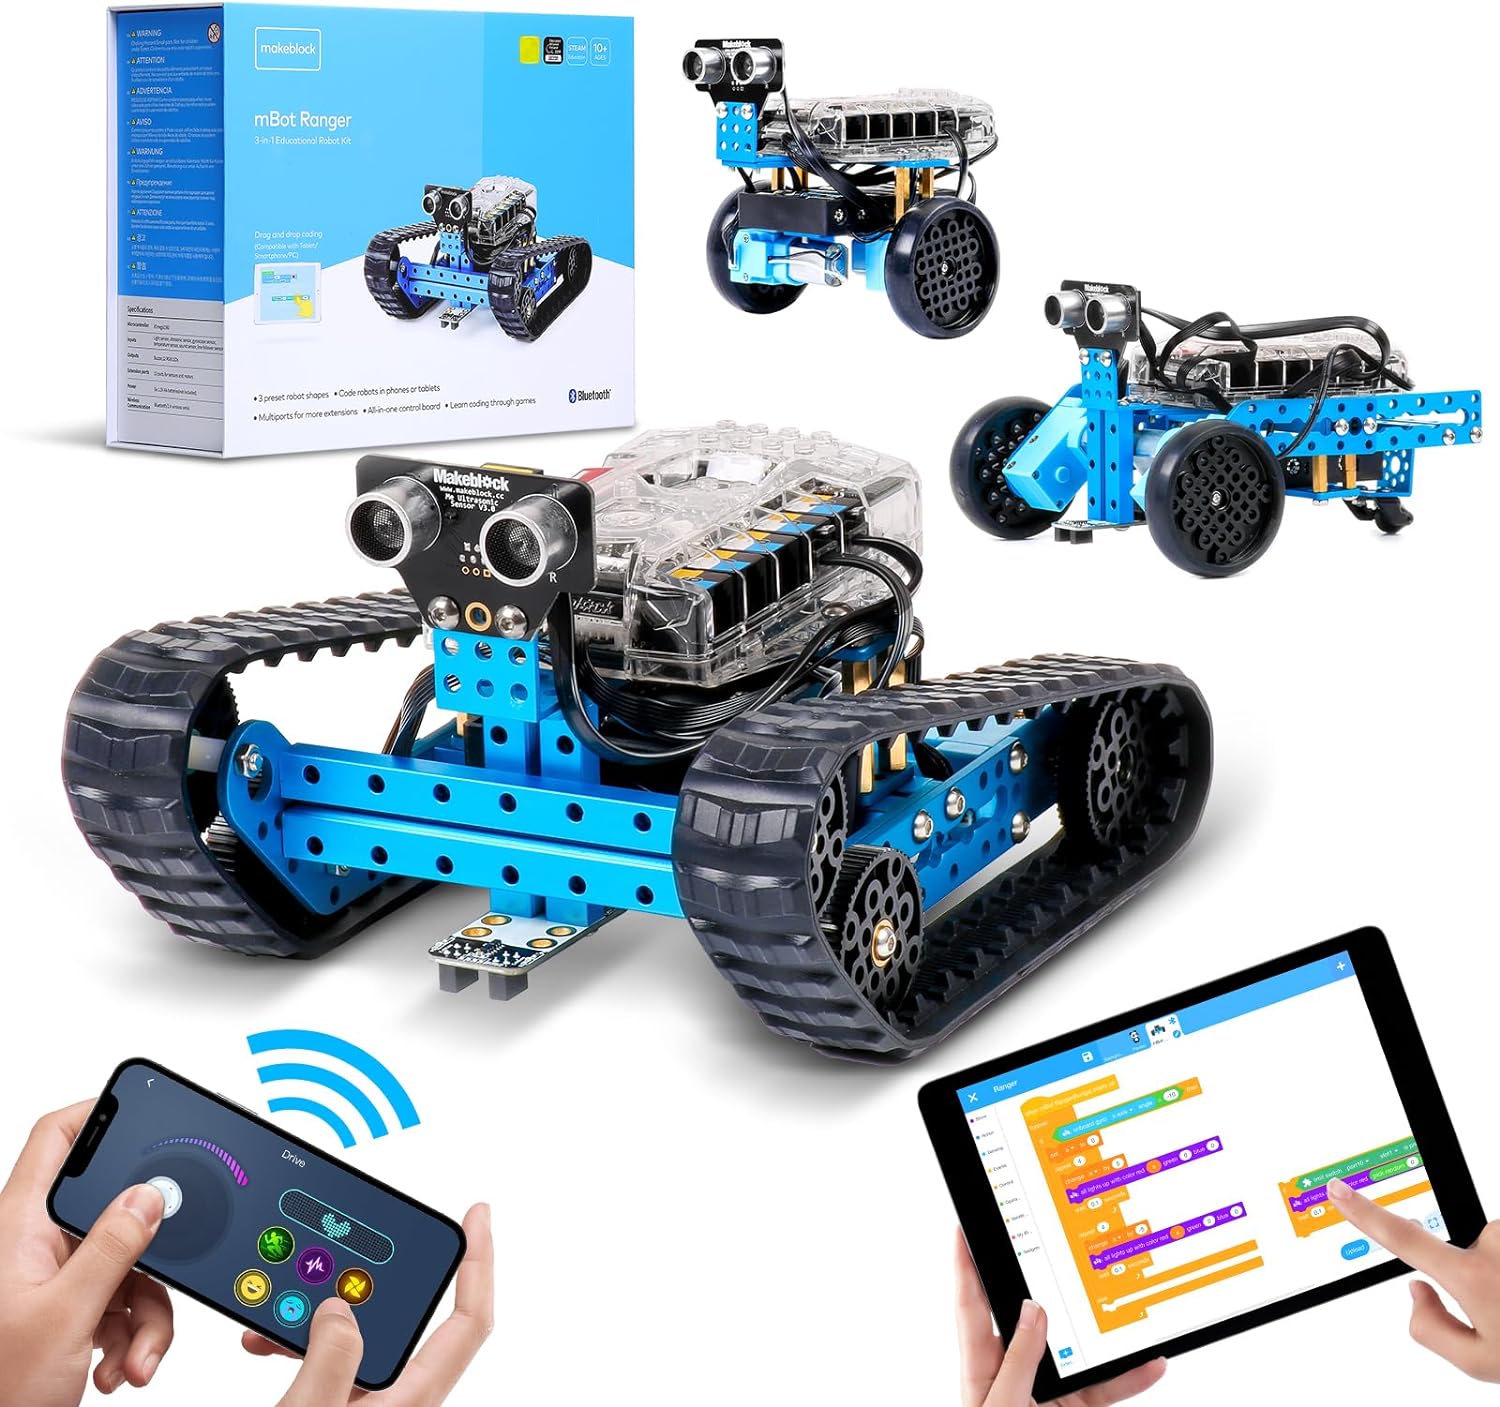 Makeblock mBot Ranger 3 in 1 Robot Kit_ Robotics Coding Kit for Kids to Learn Scratch _ Arduino Pro